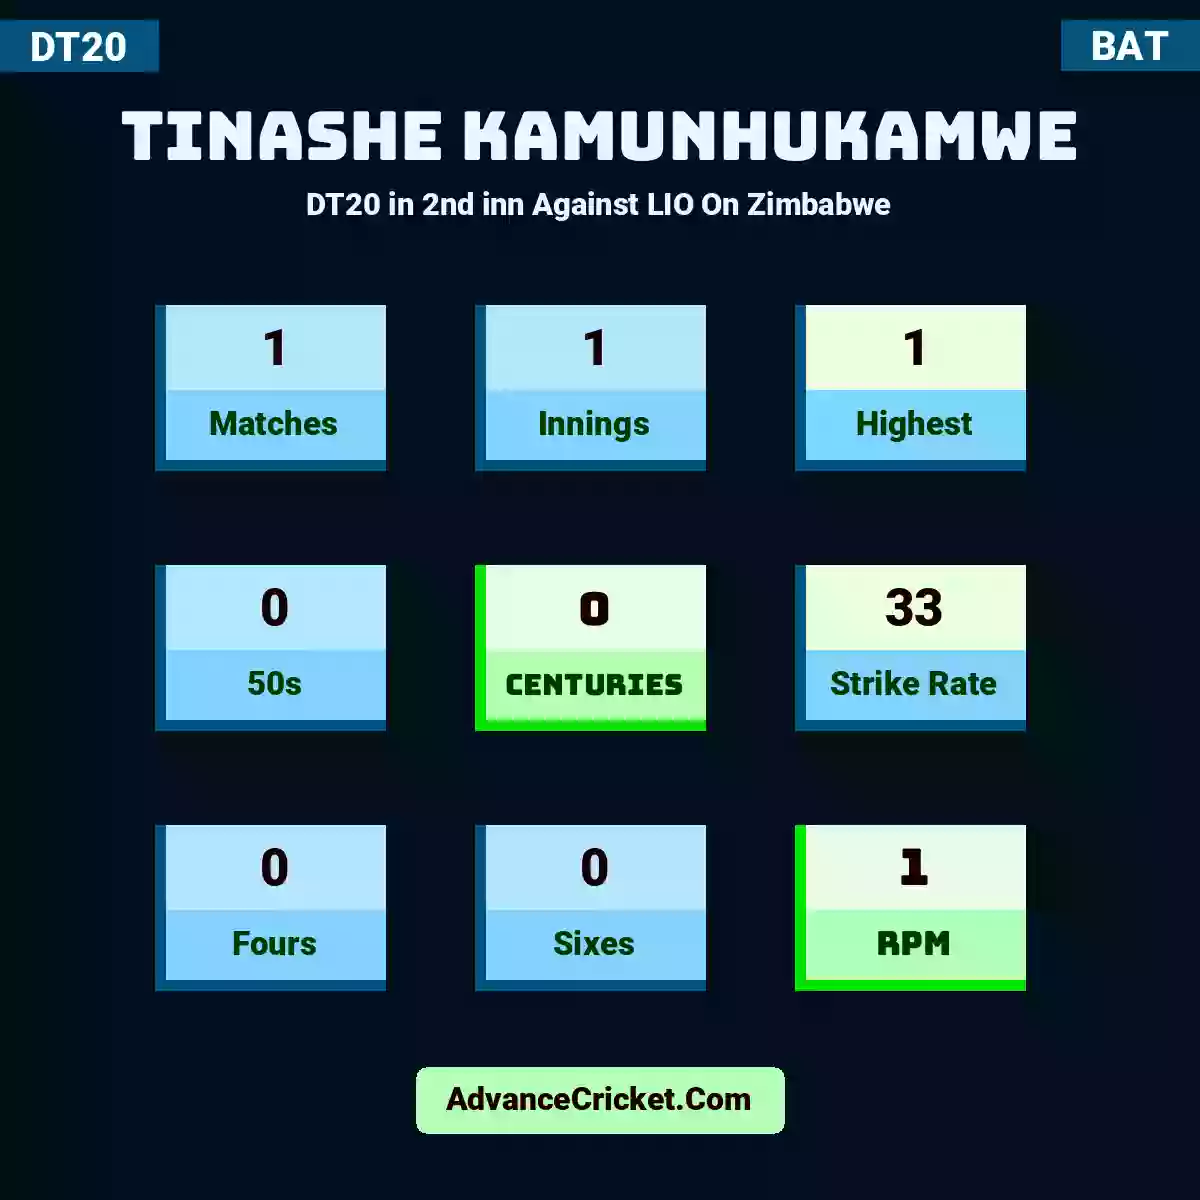 Tinashe Kamunhukamwe DT20  in 2nd inn Against LIO On Zimbabwe, Tinashe Kamunhukamwe played 1 matches, scored 1 runs as highest, 0 half-centuries, and 0 centuries, with a strike rate of 33. T.Kamunhukamwe hit 0 fours and 0 sixes, with an RPM of 1.